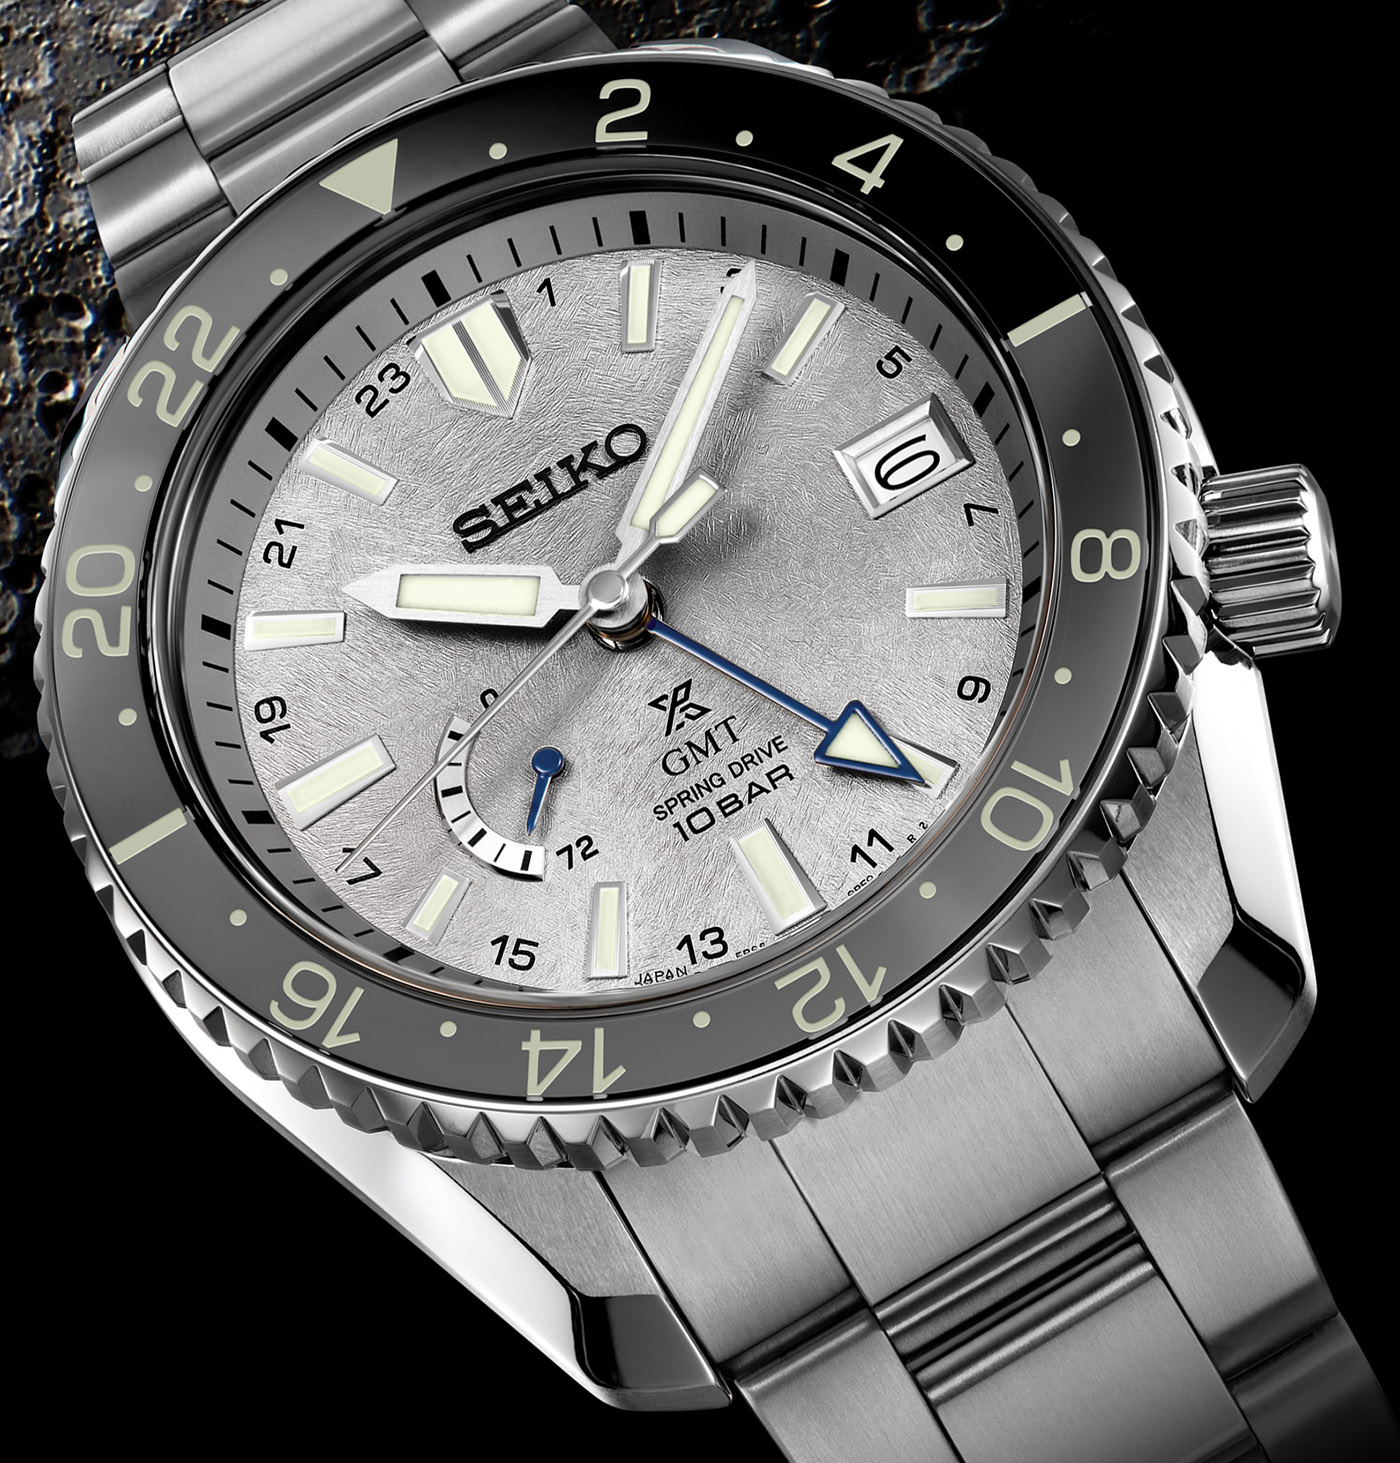 Seiko Announces Prospex LX . Special Edition SNR051 Watch | aBlogtoWatch